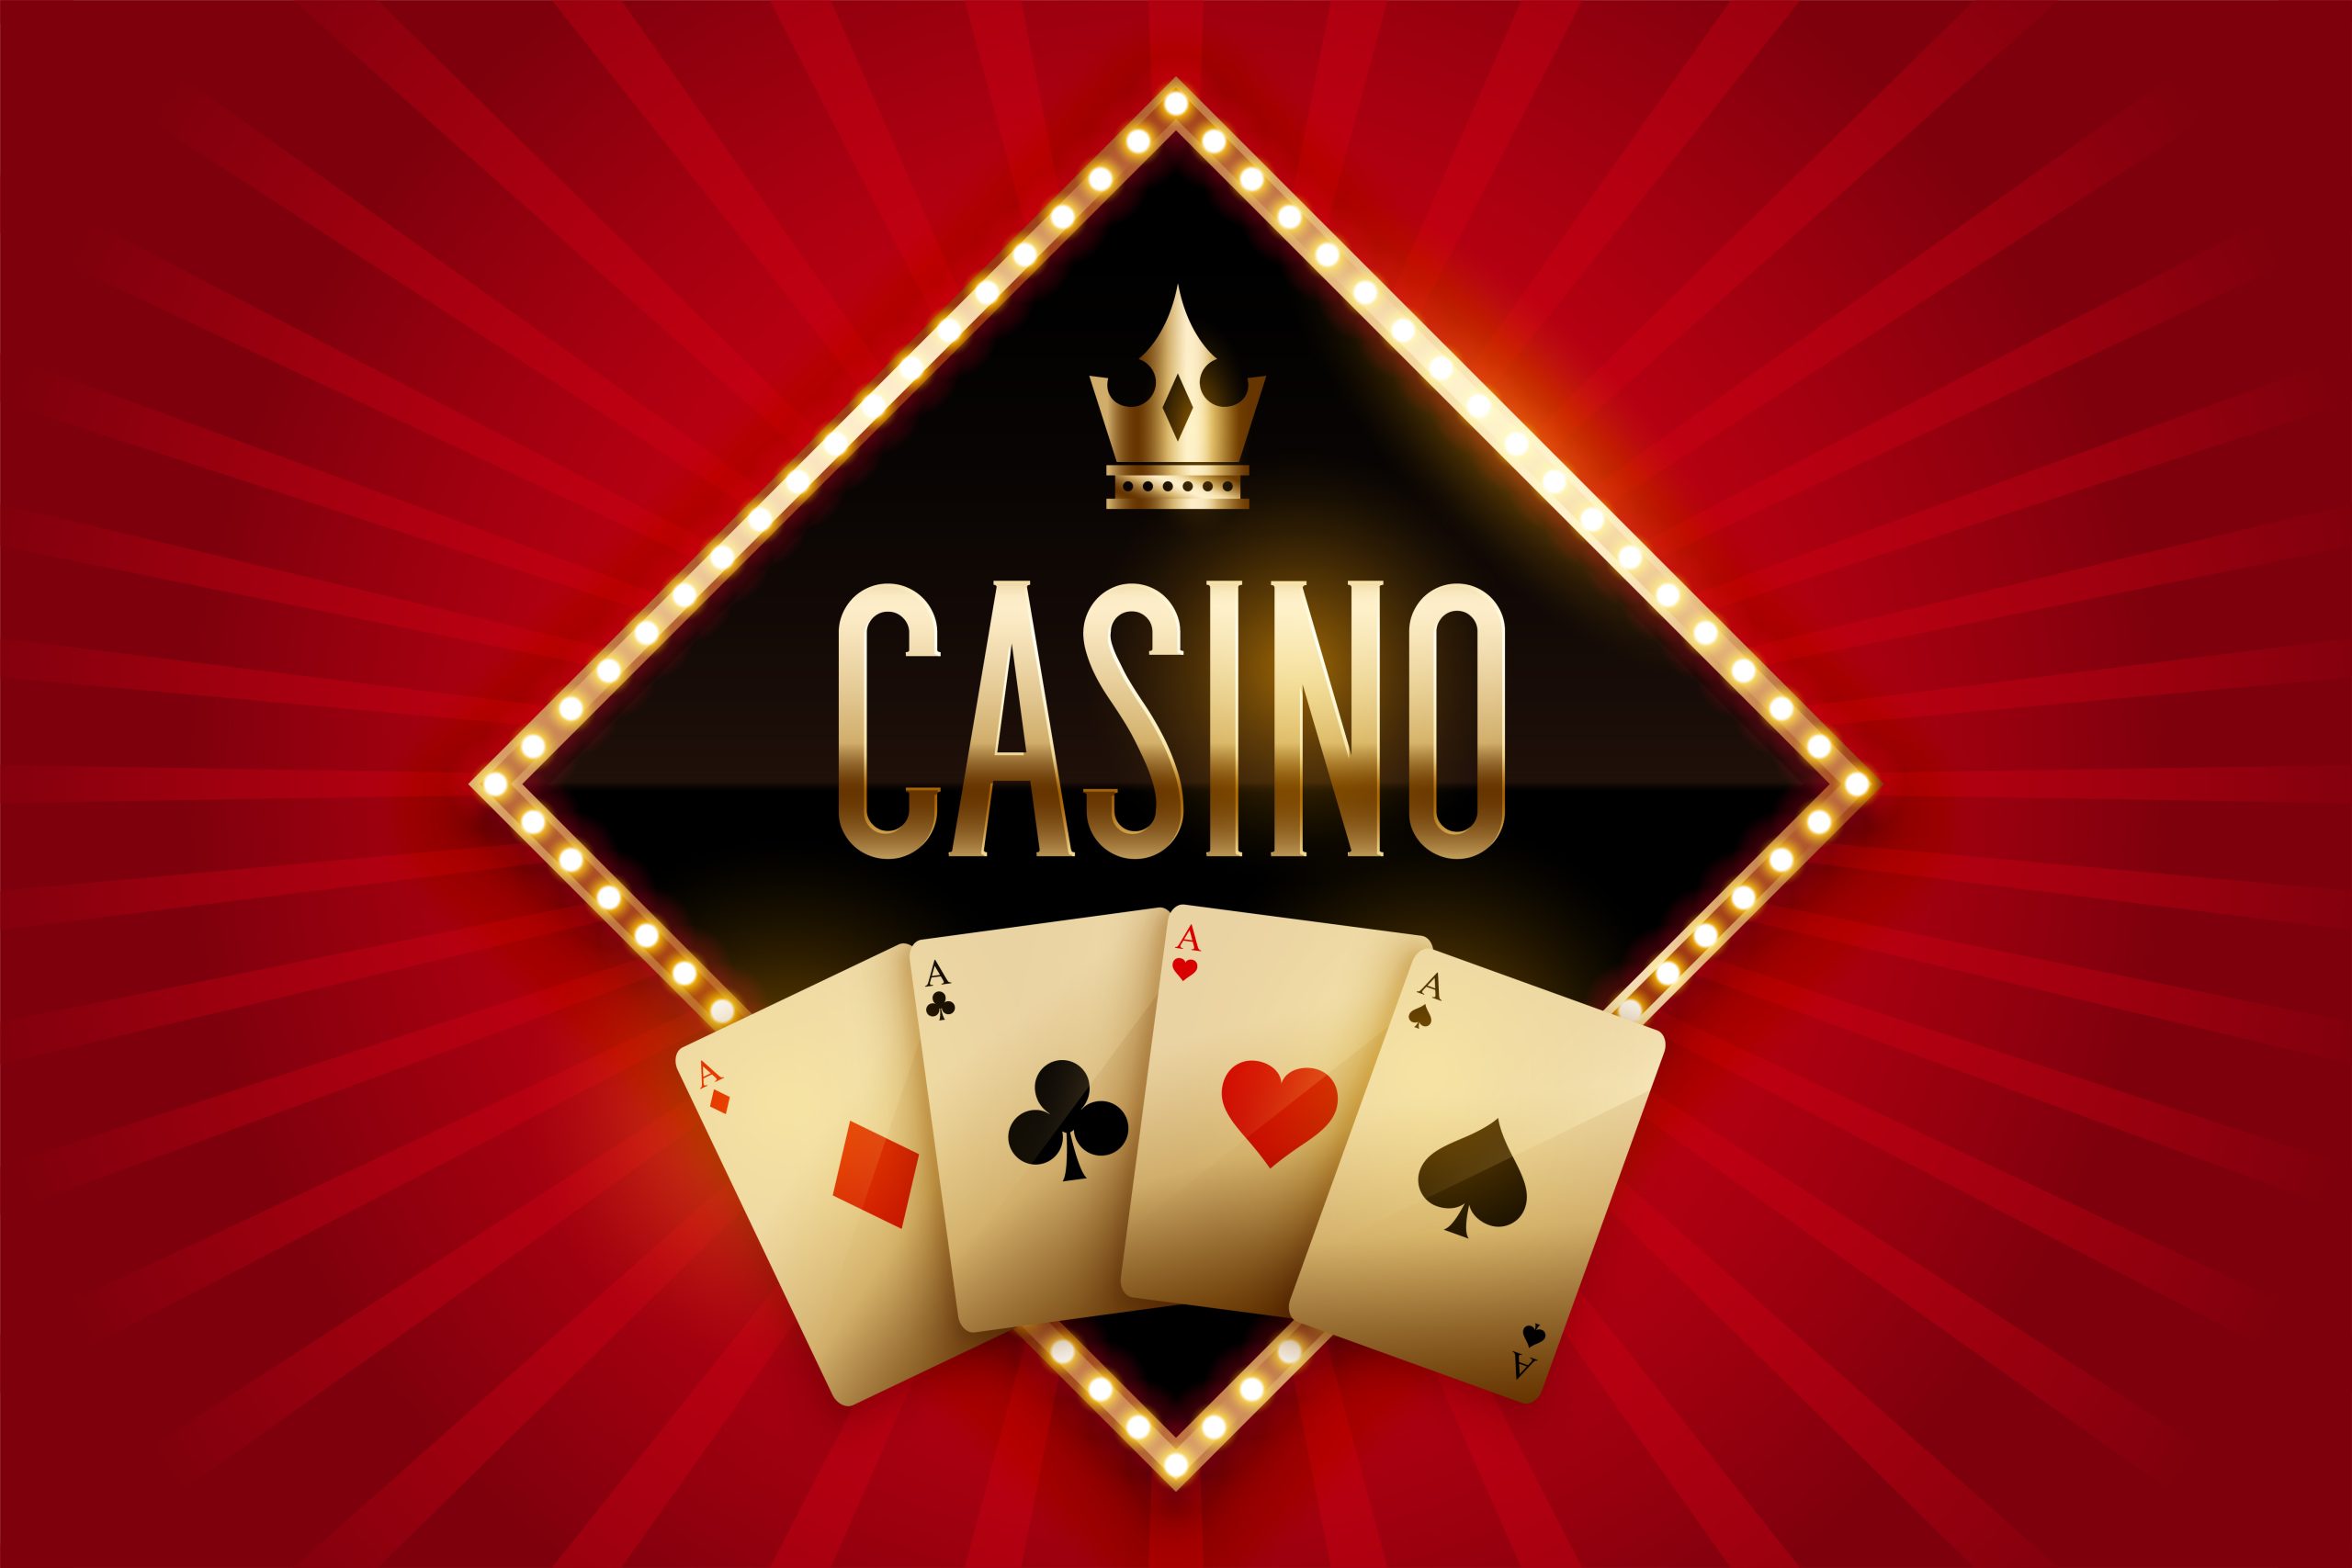 Bermain Casino Online